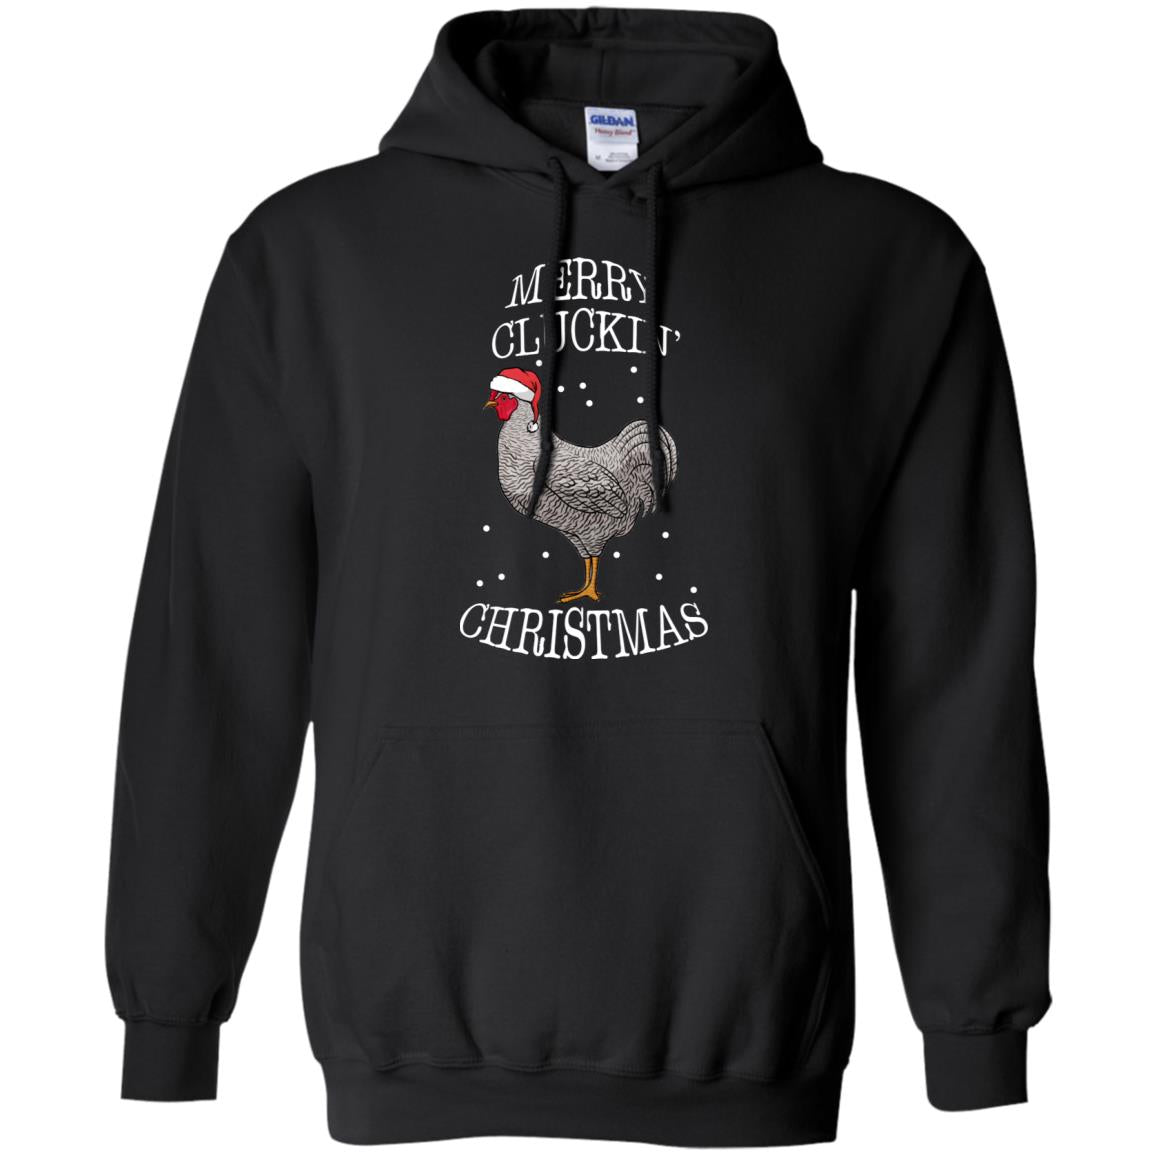 Merry Clucking Christmas Gift 2018 ShirtG185 Gildan Pullover Hoodie 8 oz.